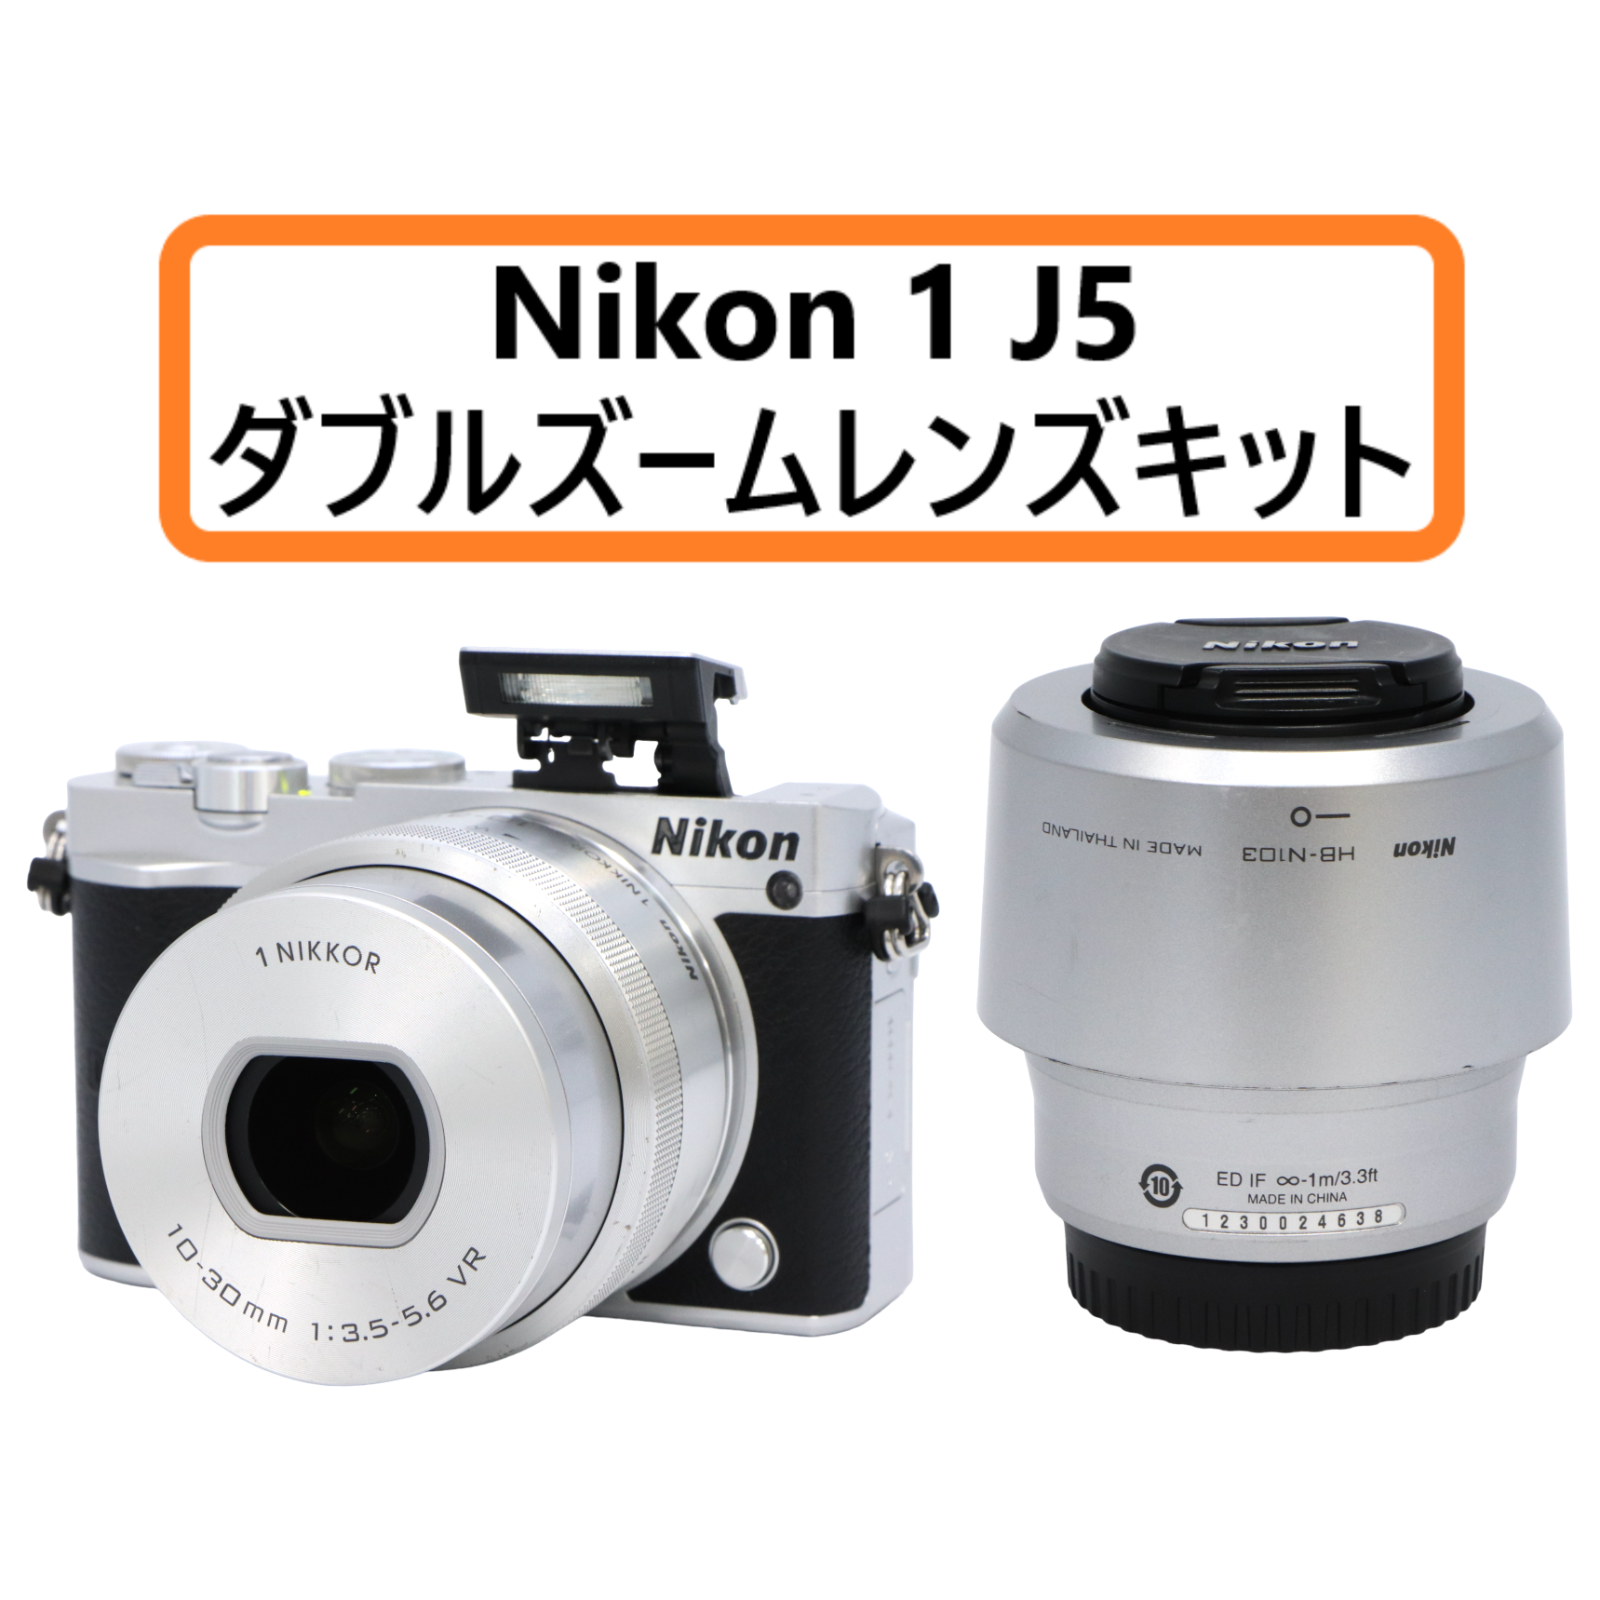 Nikon ミラーレス一眼 Nikon1 J5 ダブルレンズキット ブラック www